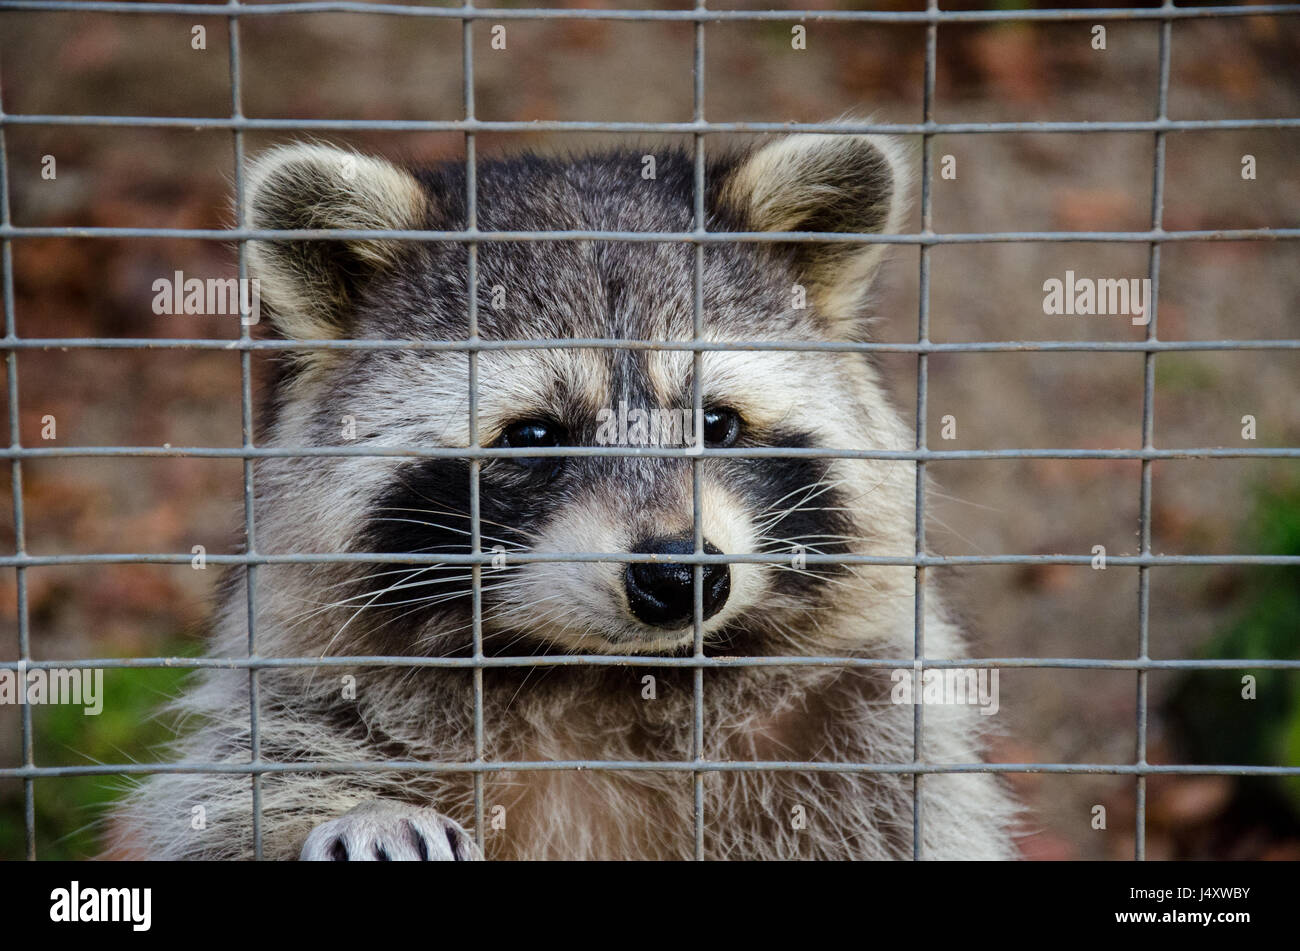 Racoon behind bars Stock Photo